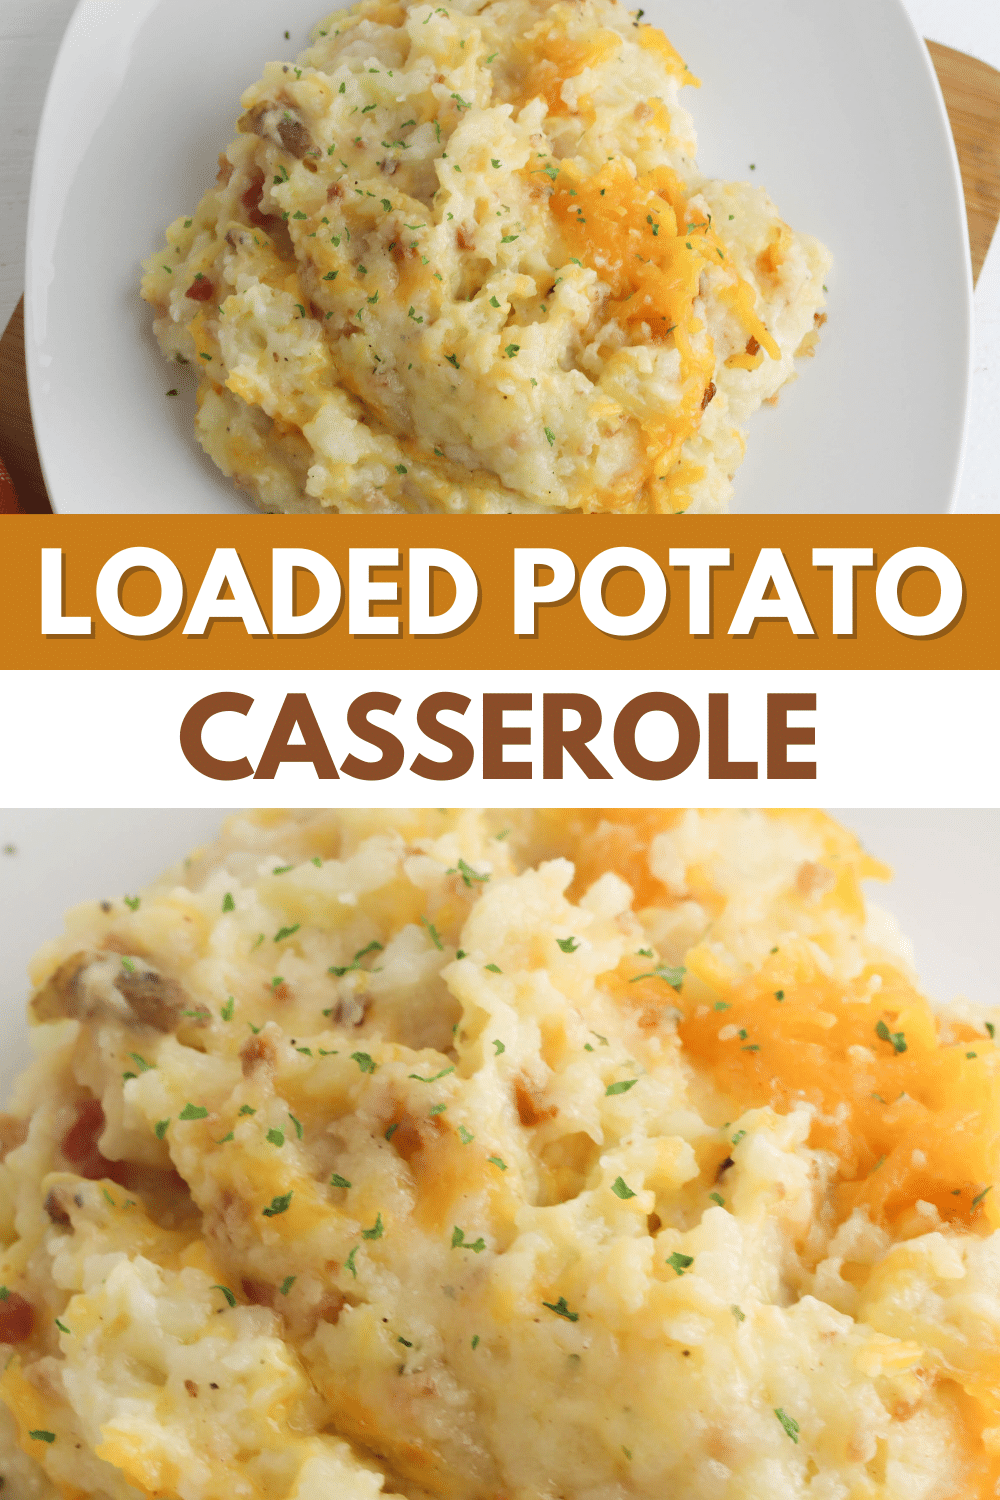 A photo of a delicious loaded potato casserole on a plate.